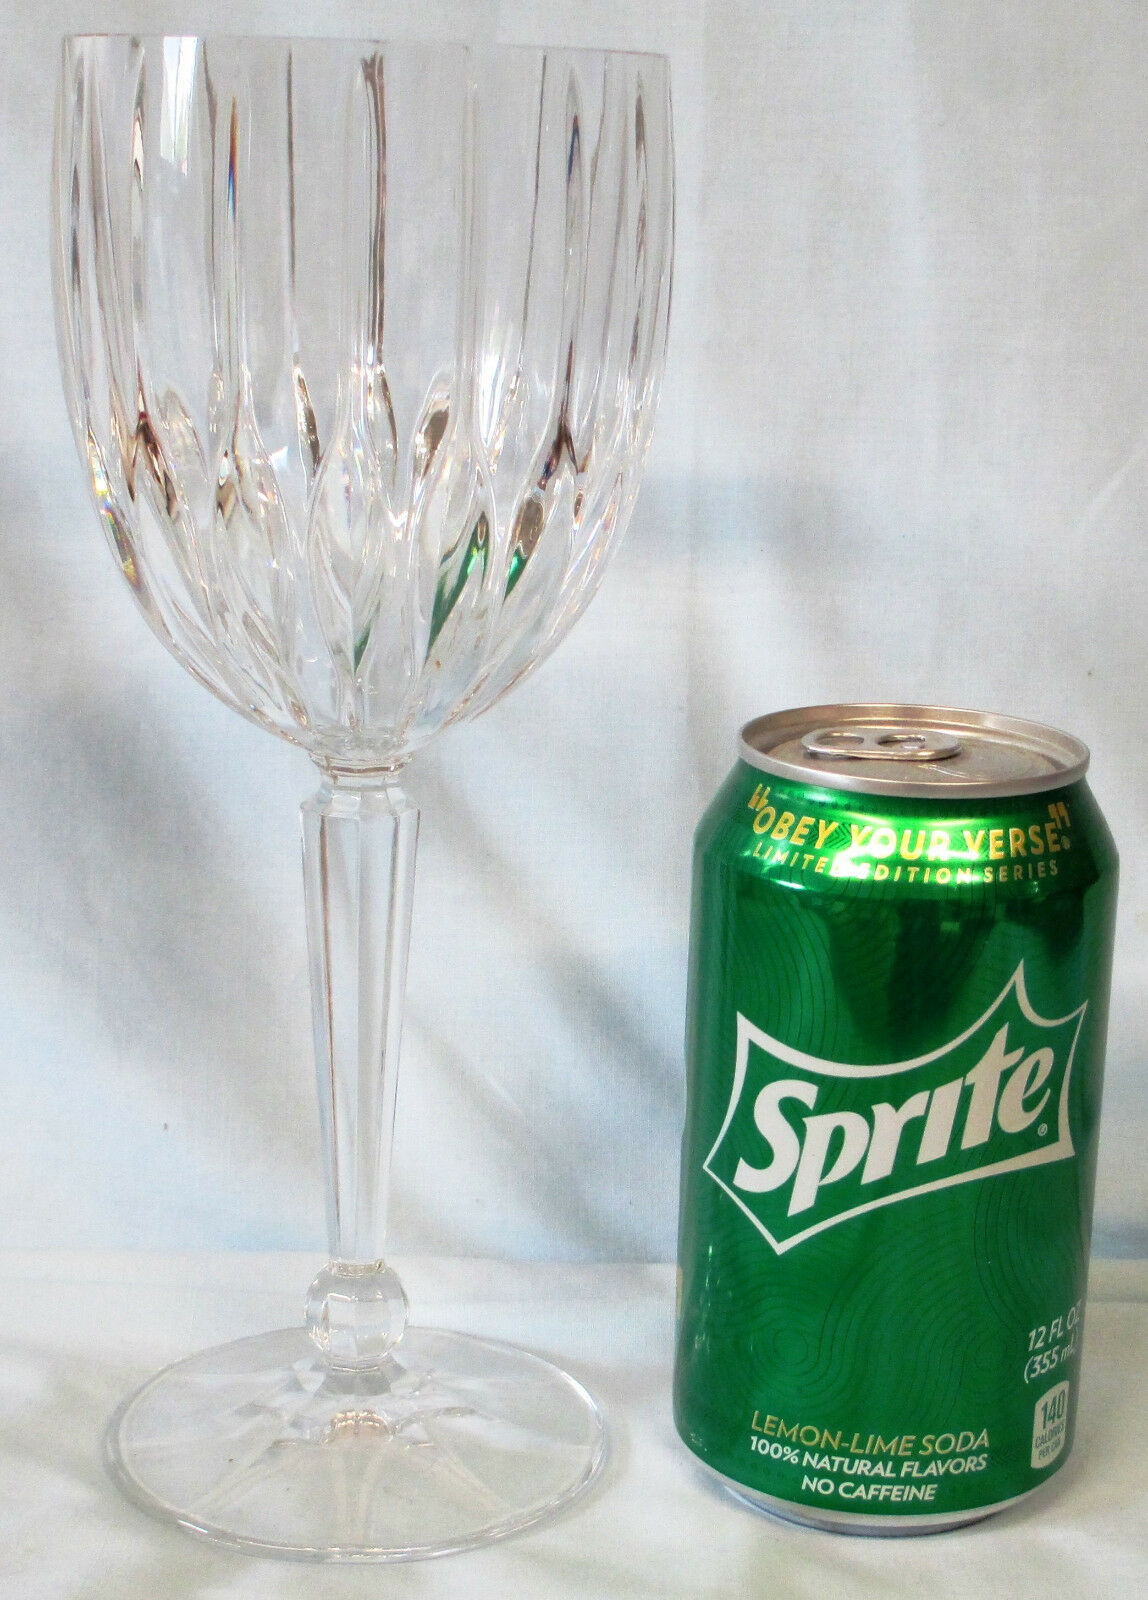 Mikasa Lexington Avenue Fluted Champagne Glass Goblet Stem Set of 2 